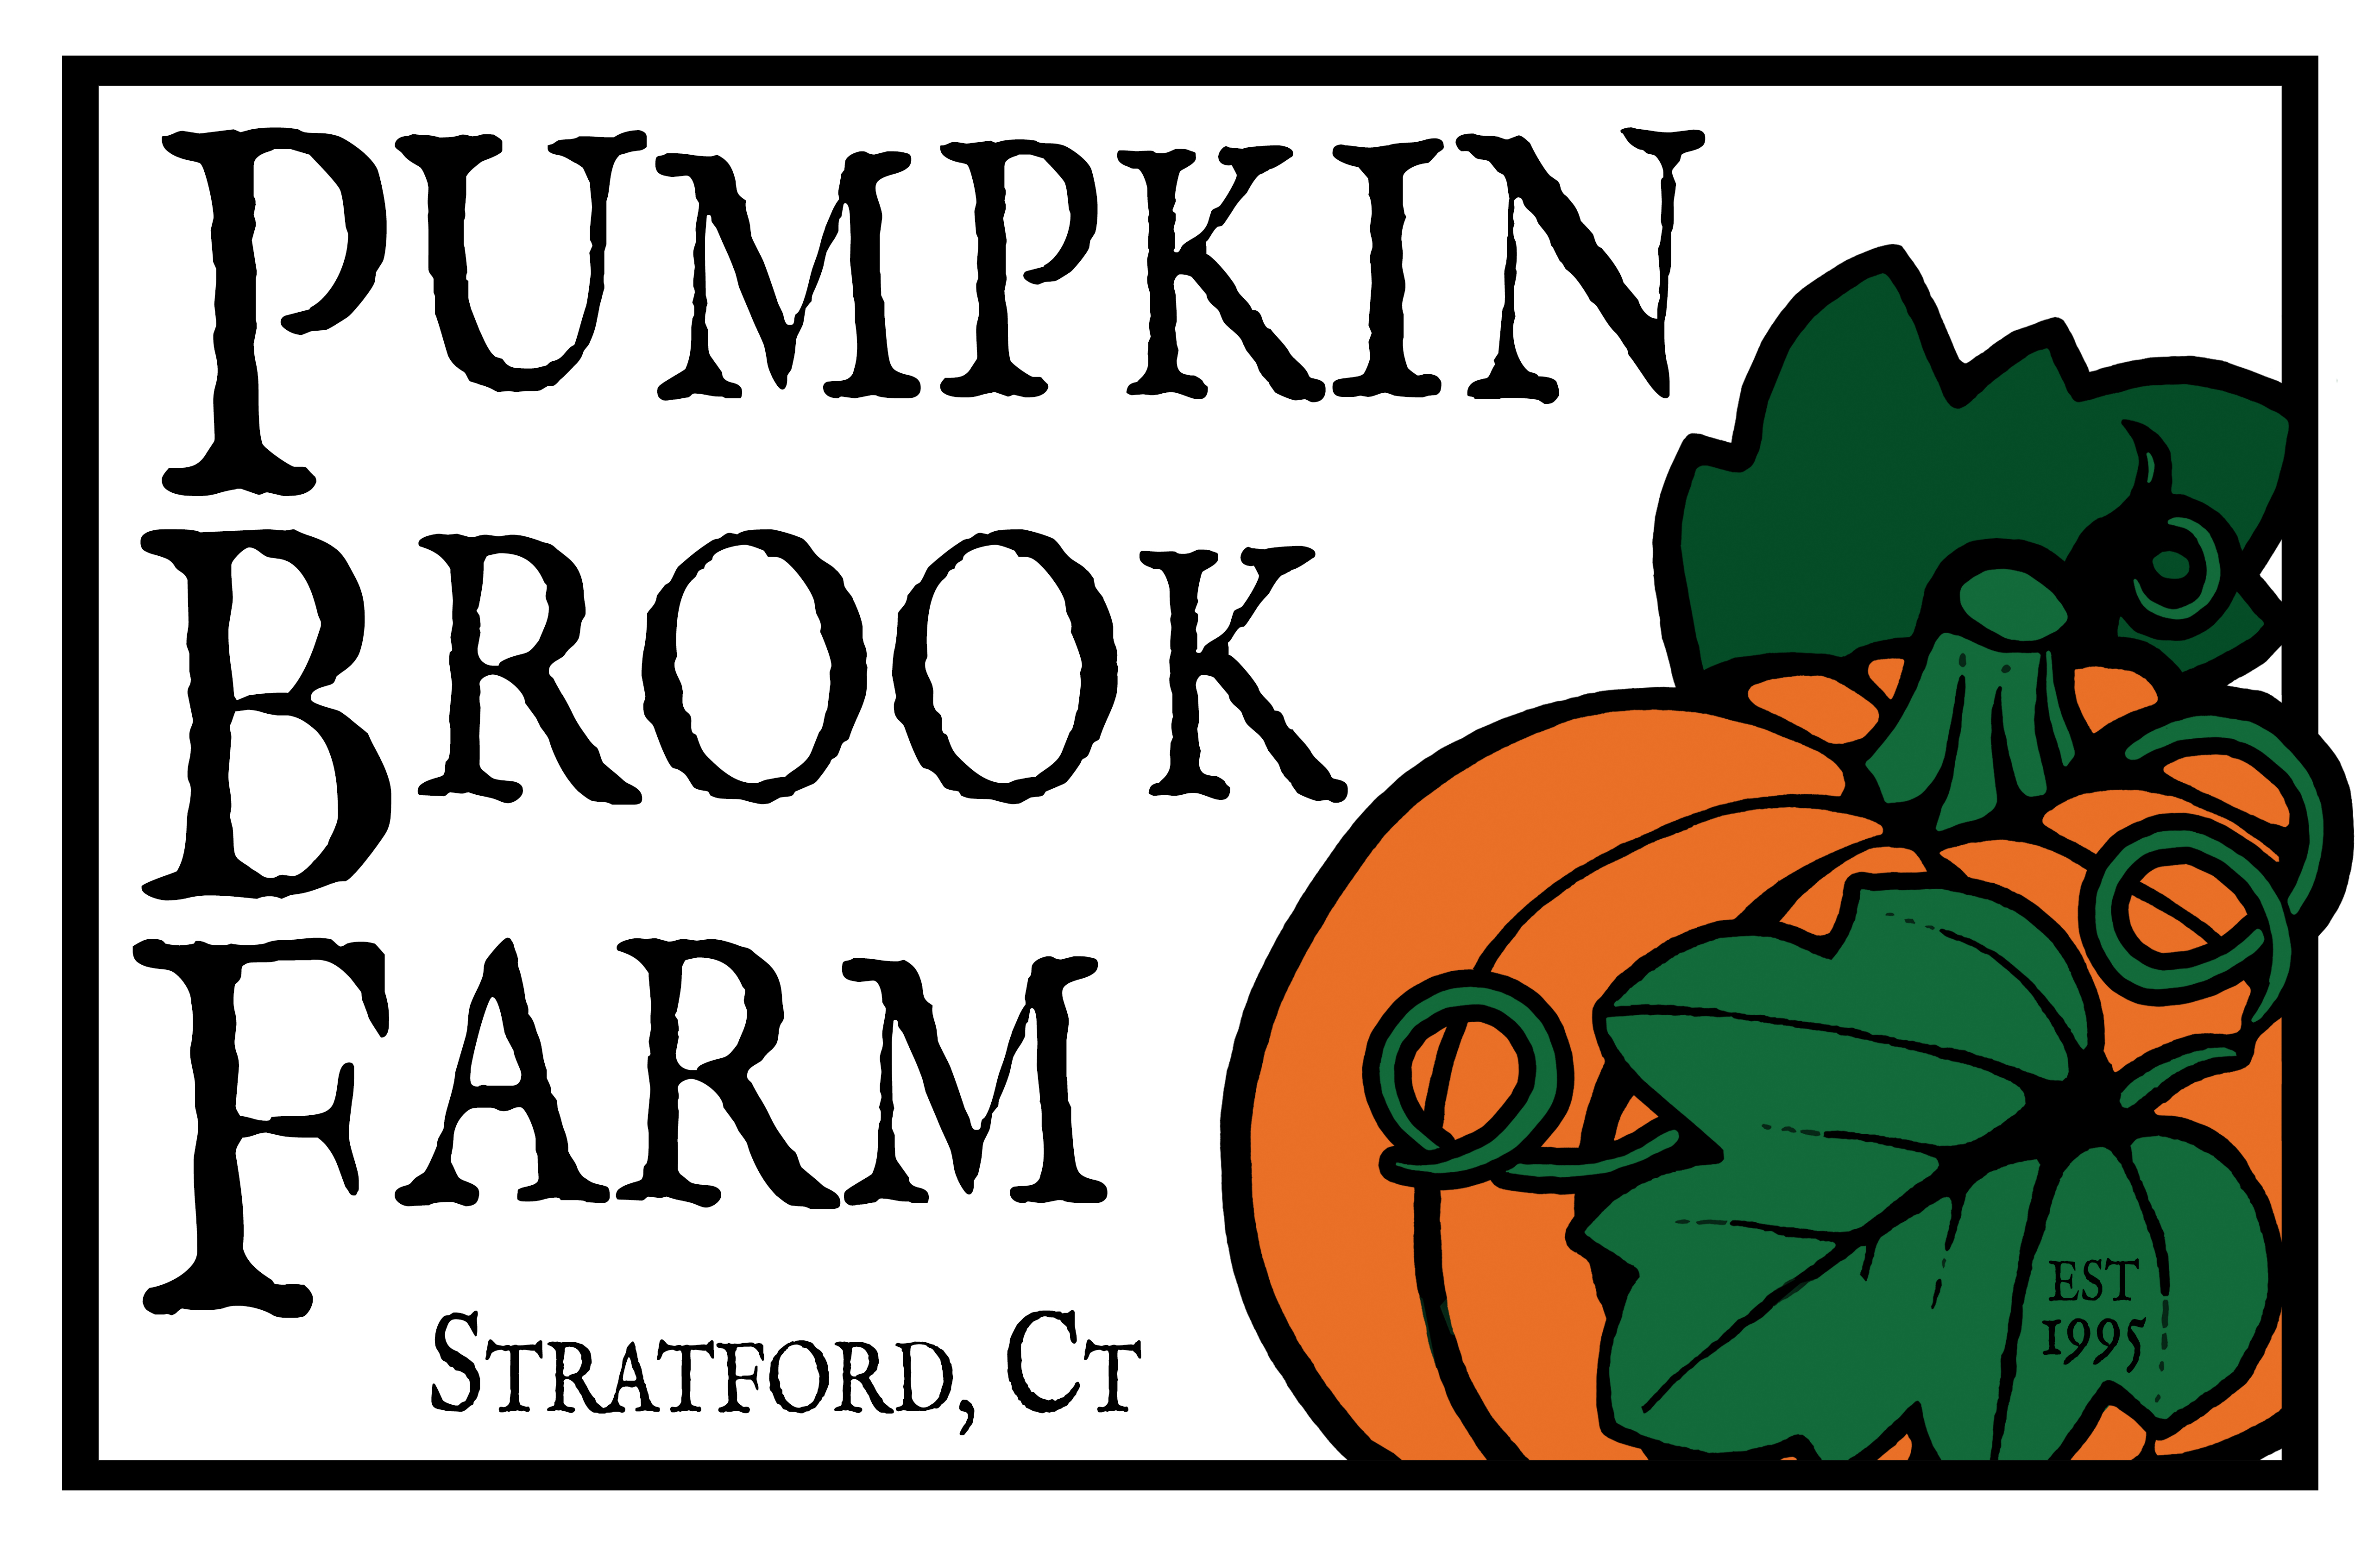 Pumpkin Brook Farm ONLINE ORDERING